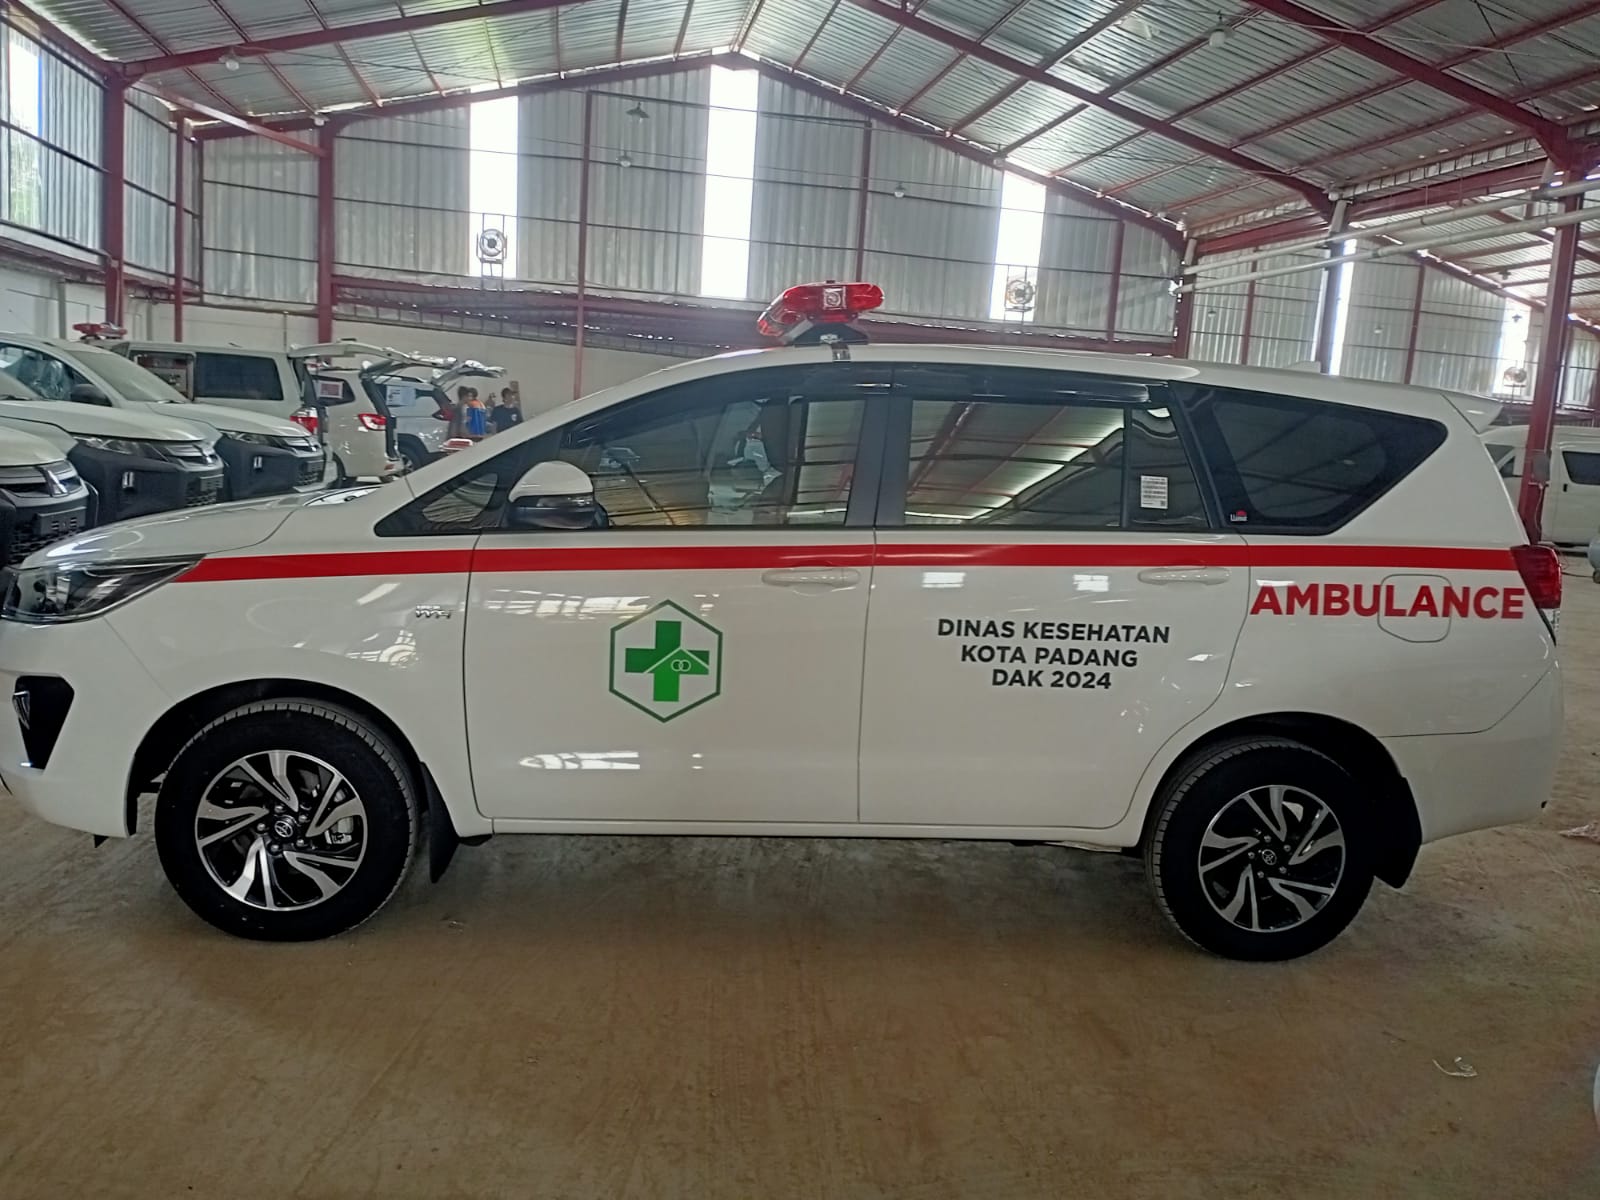 Harga Karoseri Modifikasi Ambulance Berkualitas Sidoarjo